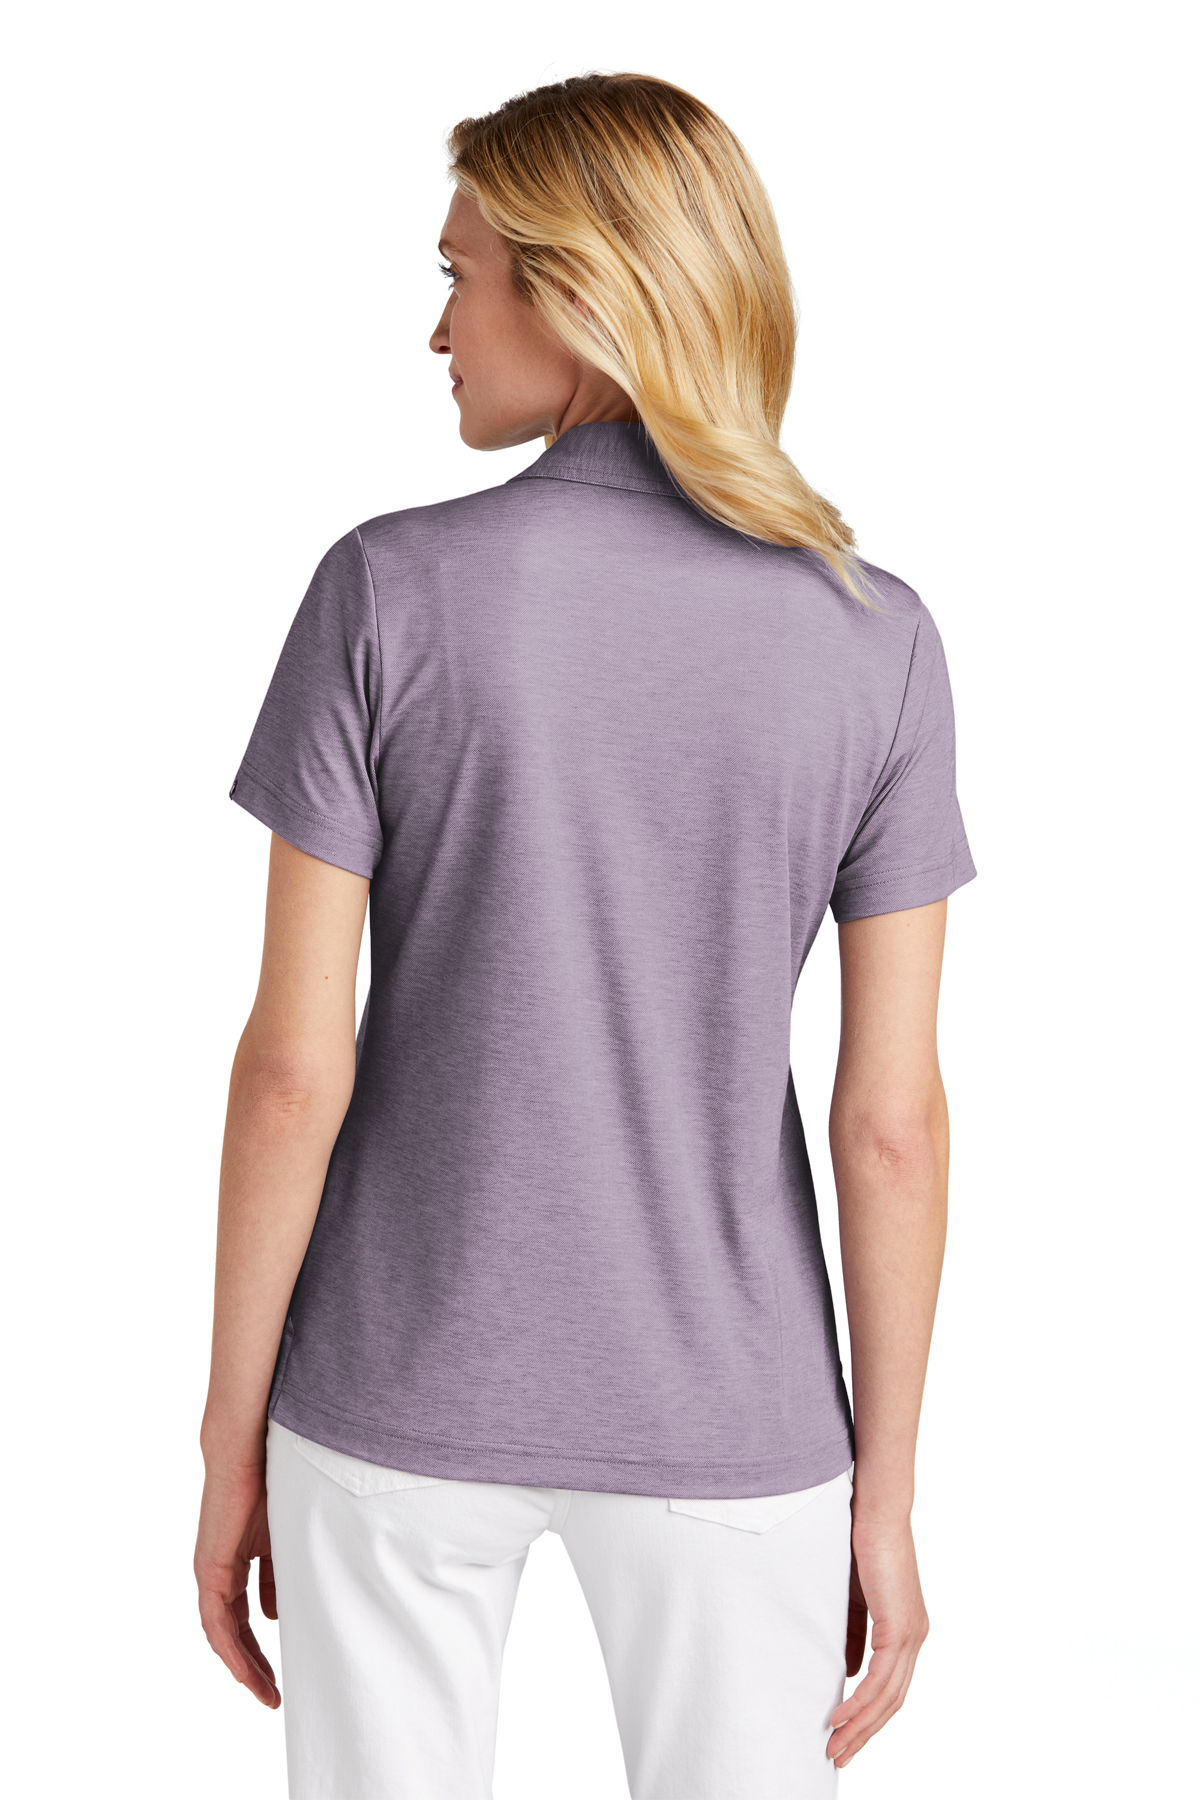 TravisMathew Ladies Oceanside Heather Polo | Product | SanMar | T-Shirts